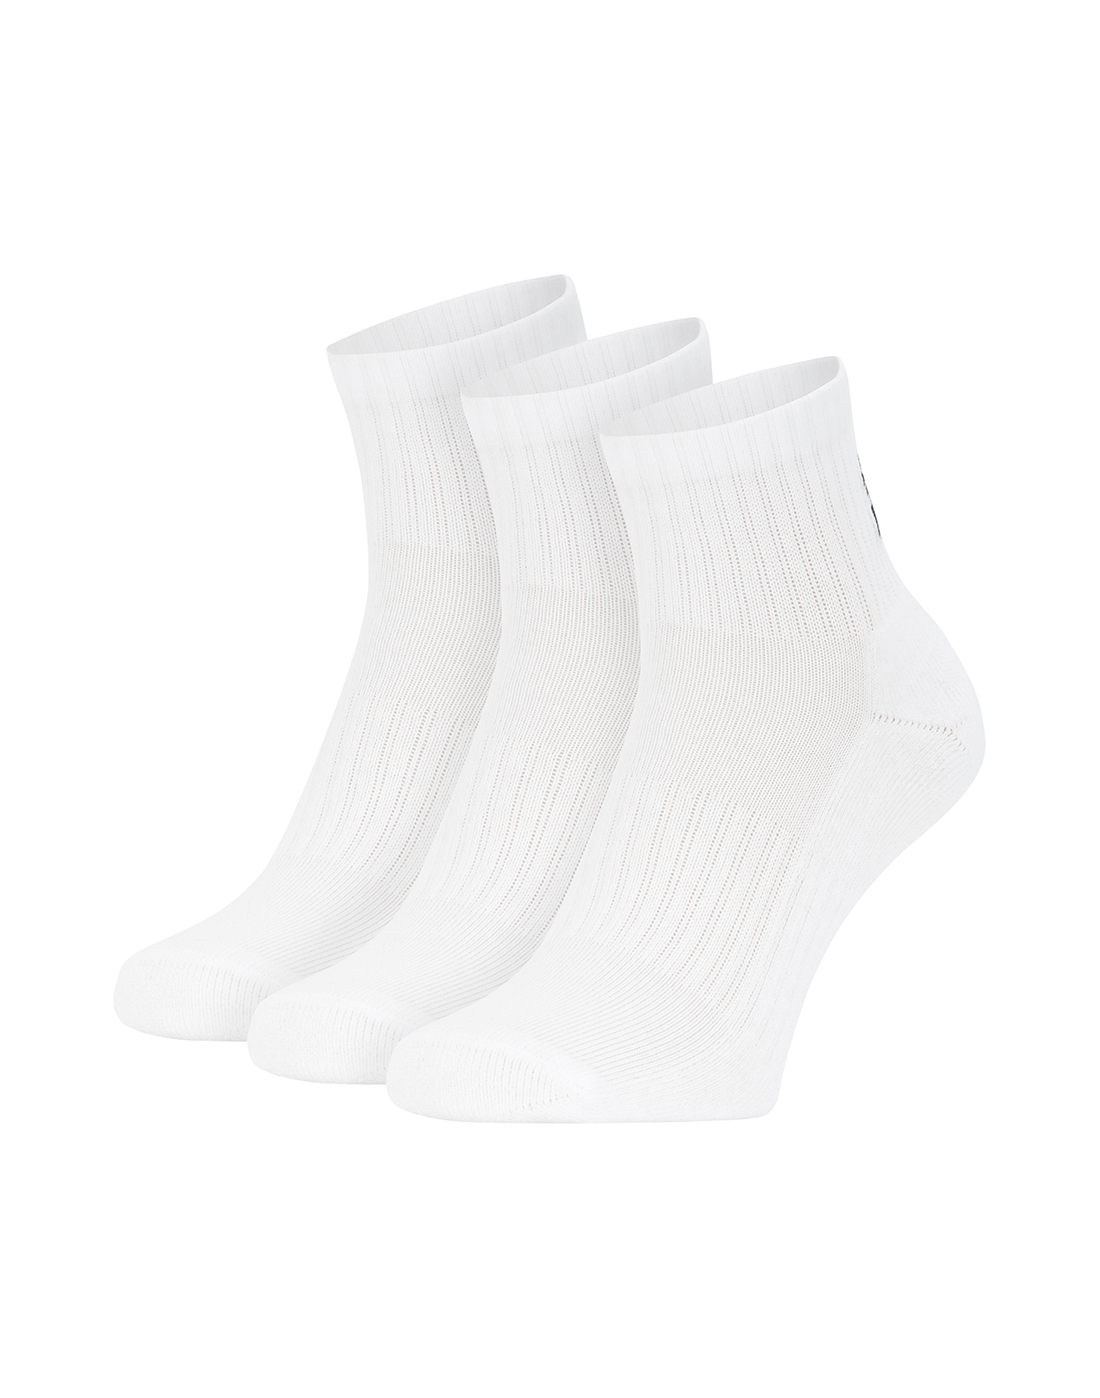 Under Armour Core Quarter 3 Pack Crew Socks - White | Life Style Sports UK